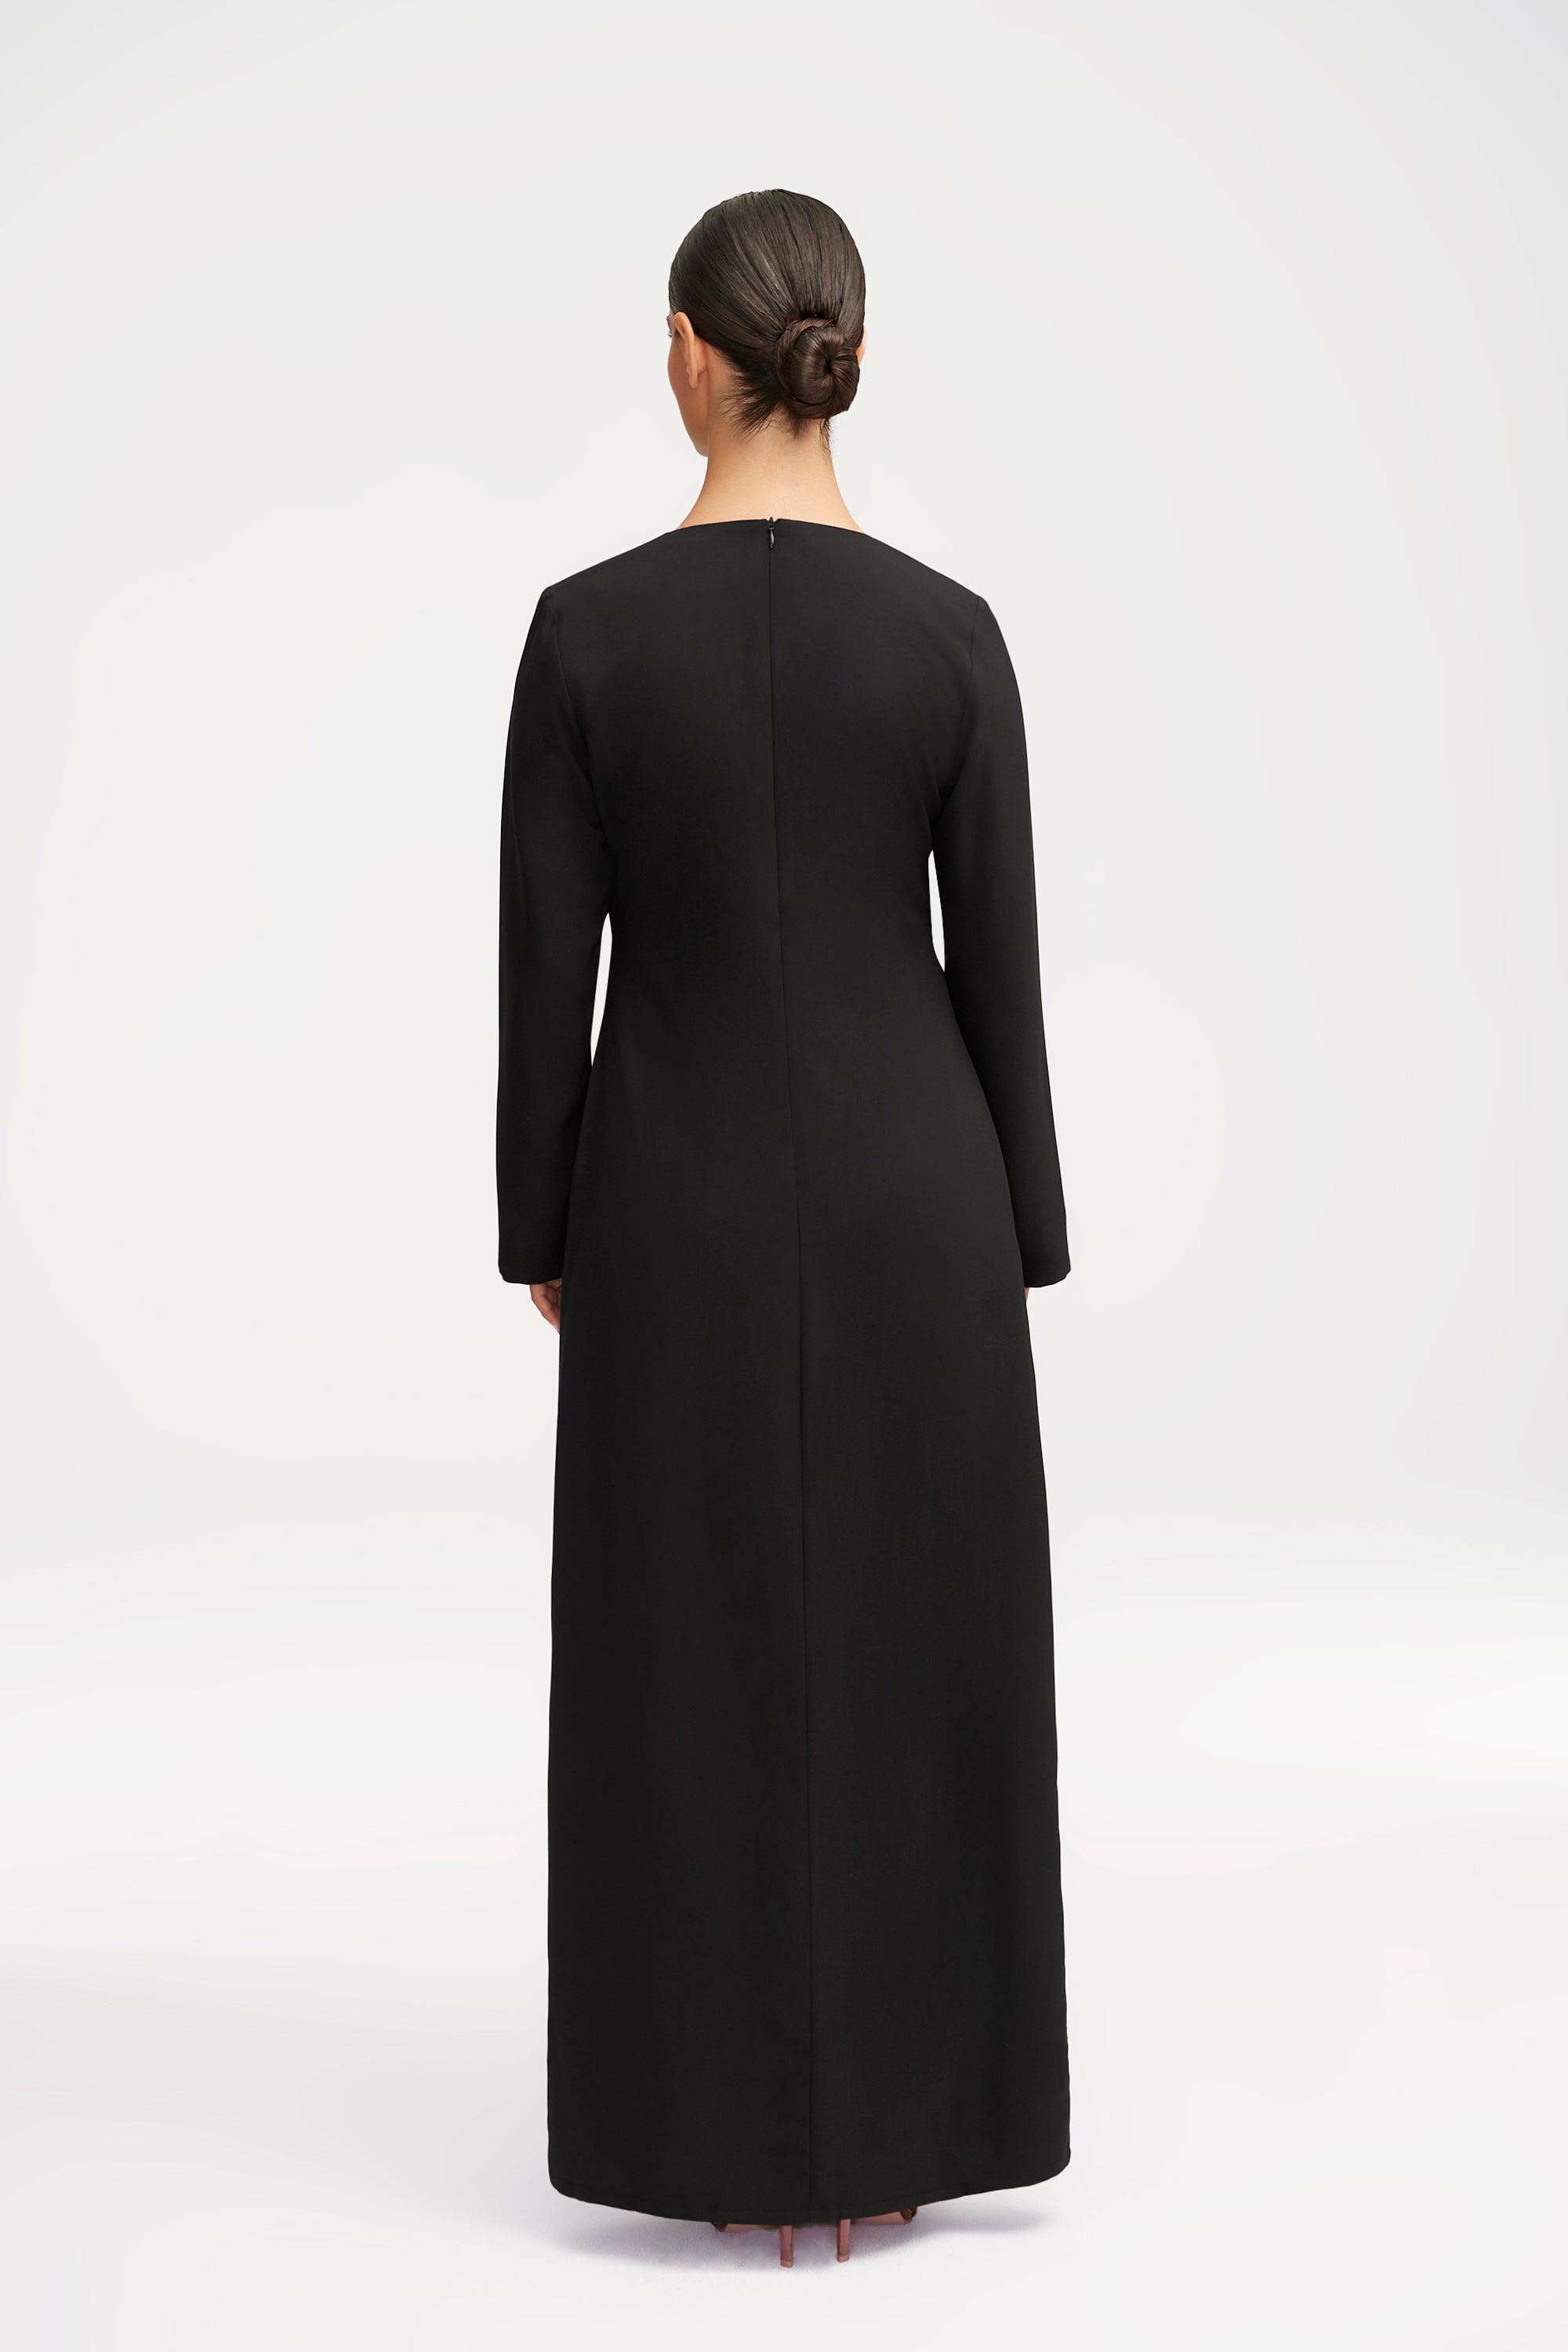 Essential Basic Maxi Dress - Black Clothing epschoolboard 